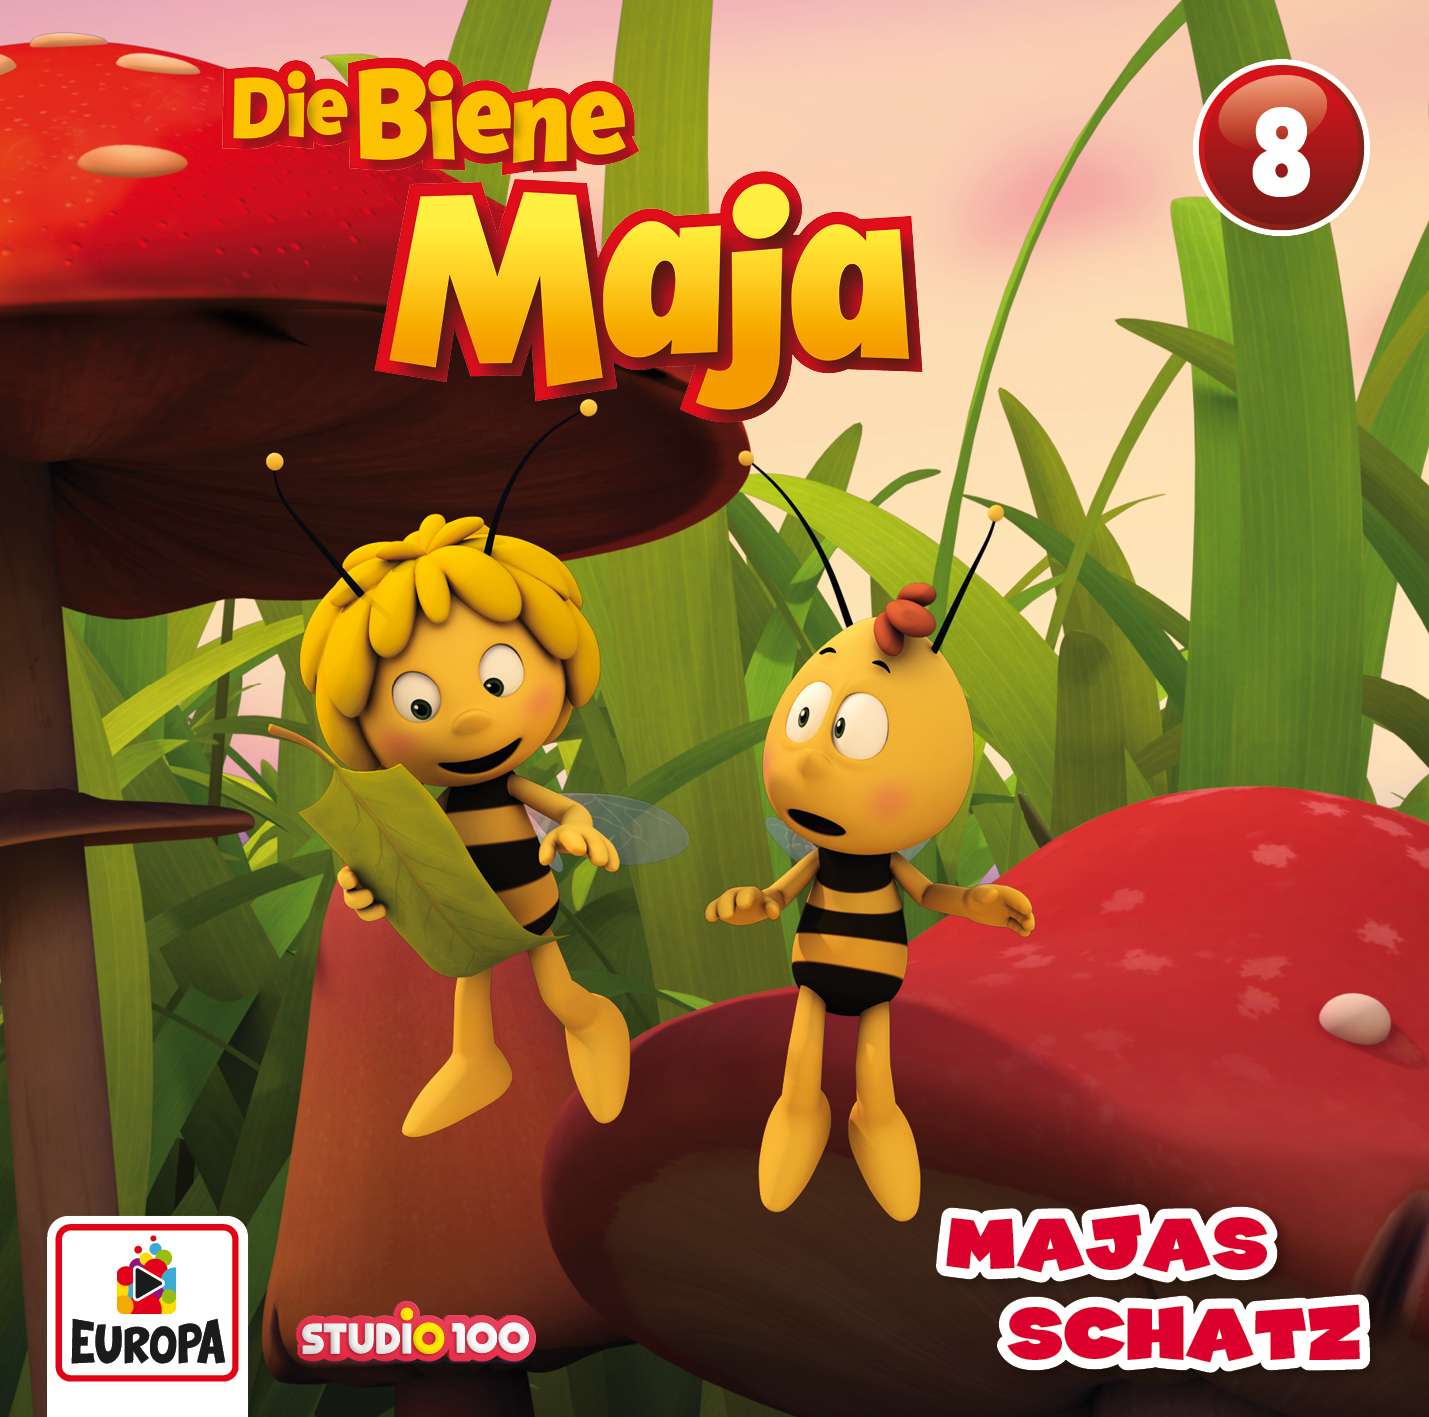 Die Biene Maja CGI: Majas Schatz (CGI)